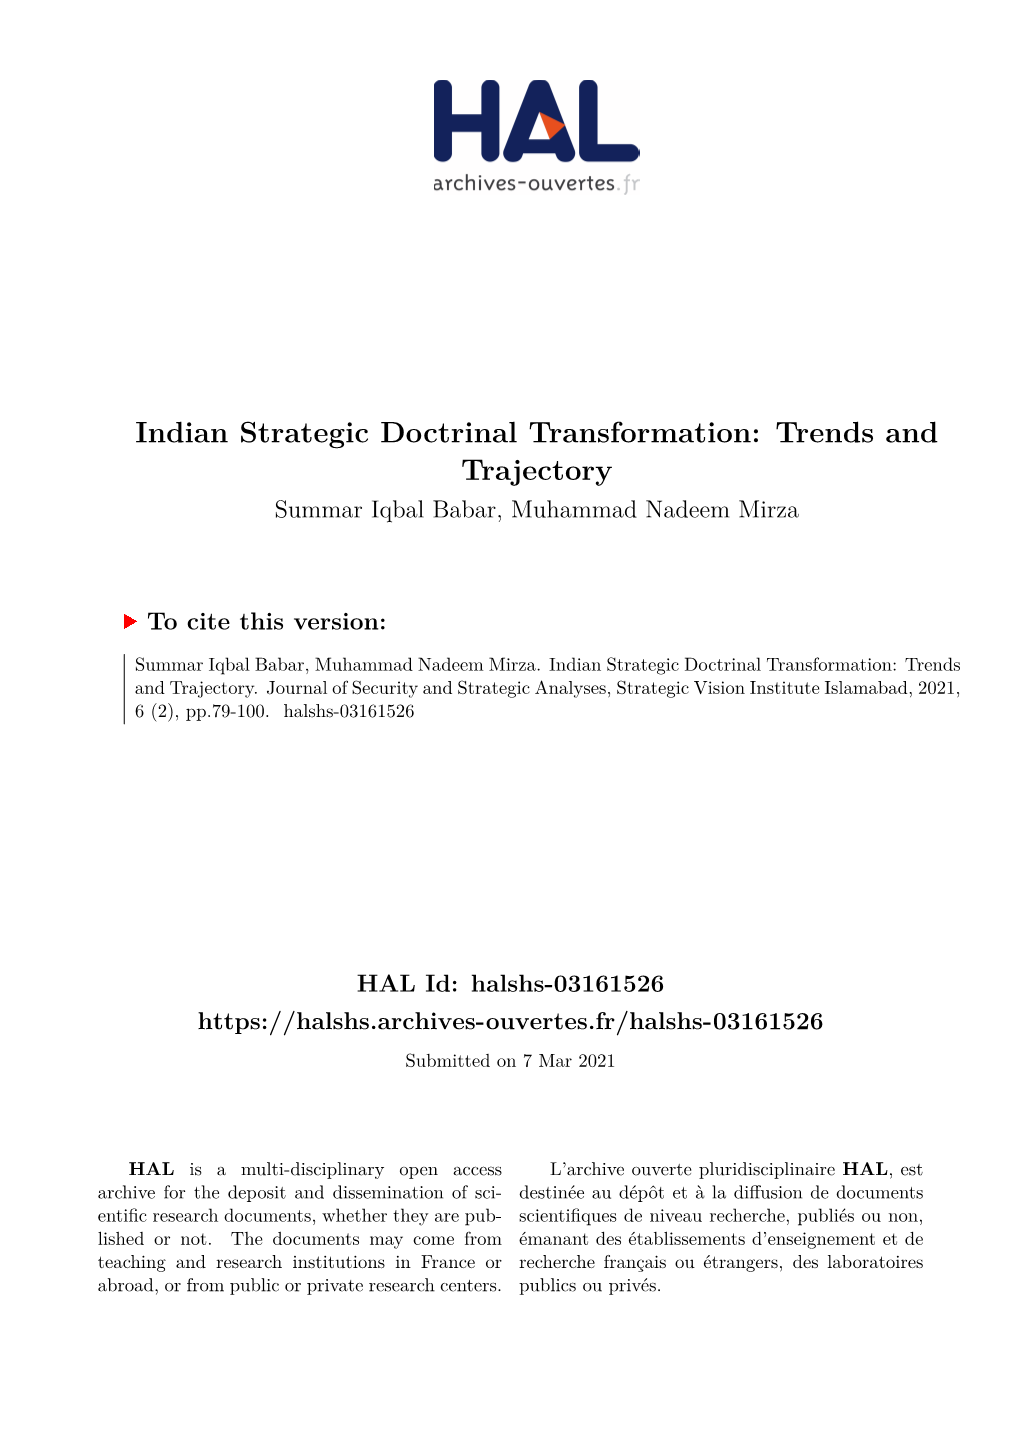 Indian Strategic Doctrinal Transformation: Trends and Trajectory Summar Iqbal Babar, Muhammad Nadeem Mirza